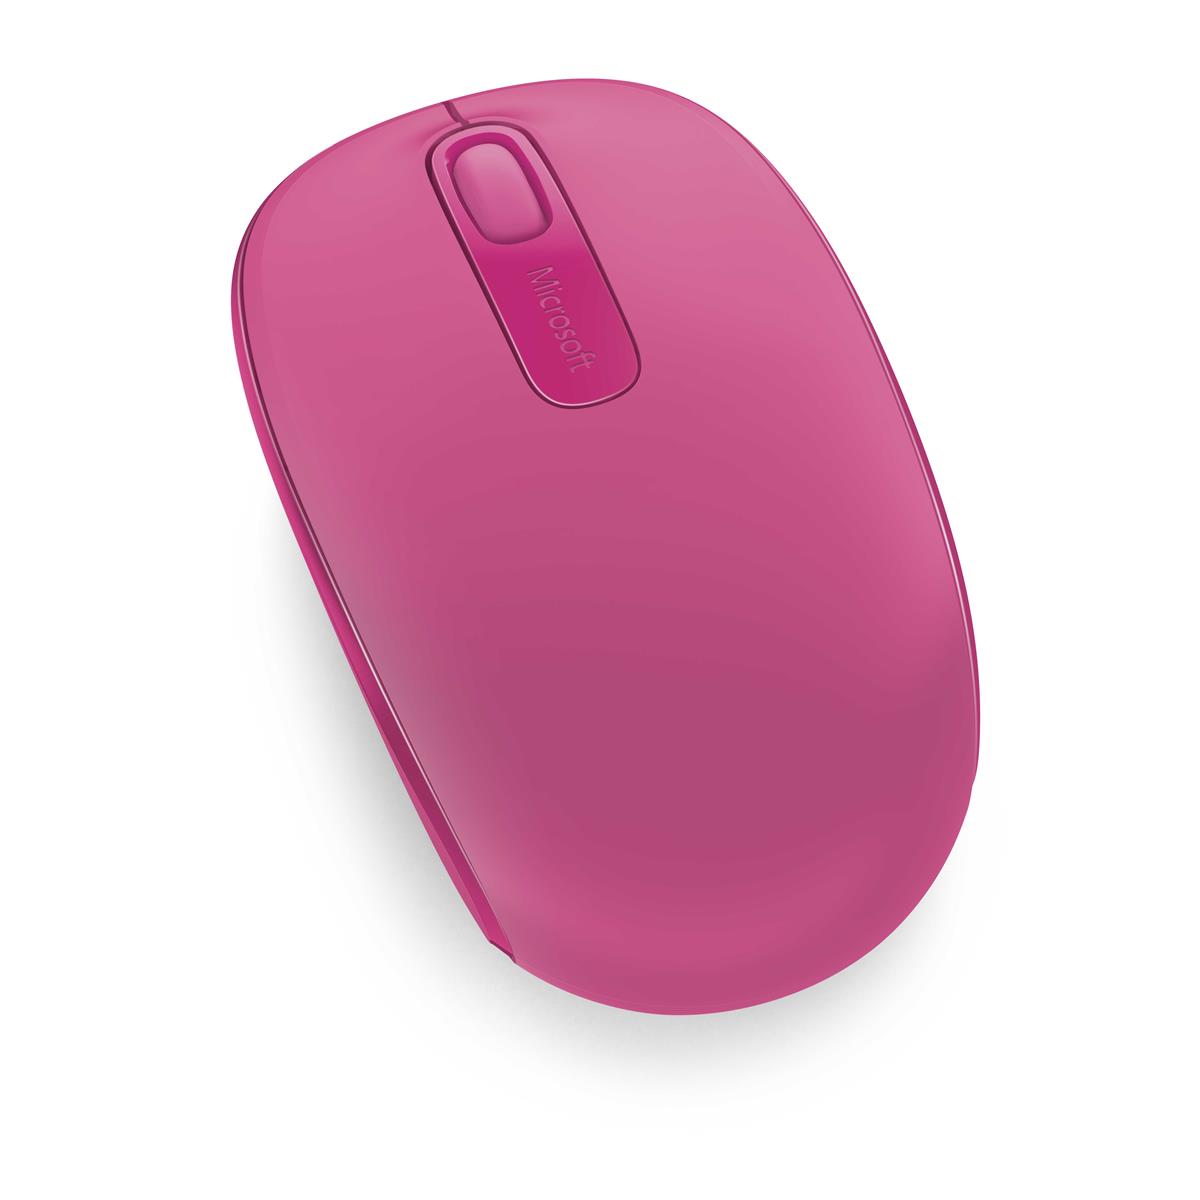 Mouse Microsoft Wireless 1850 Rosa PINK - U7Z-00062